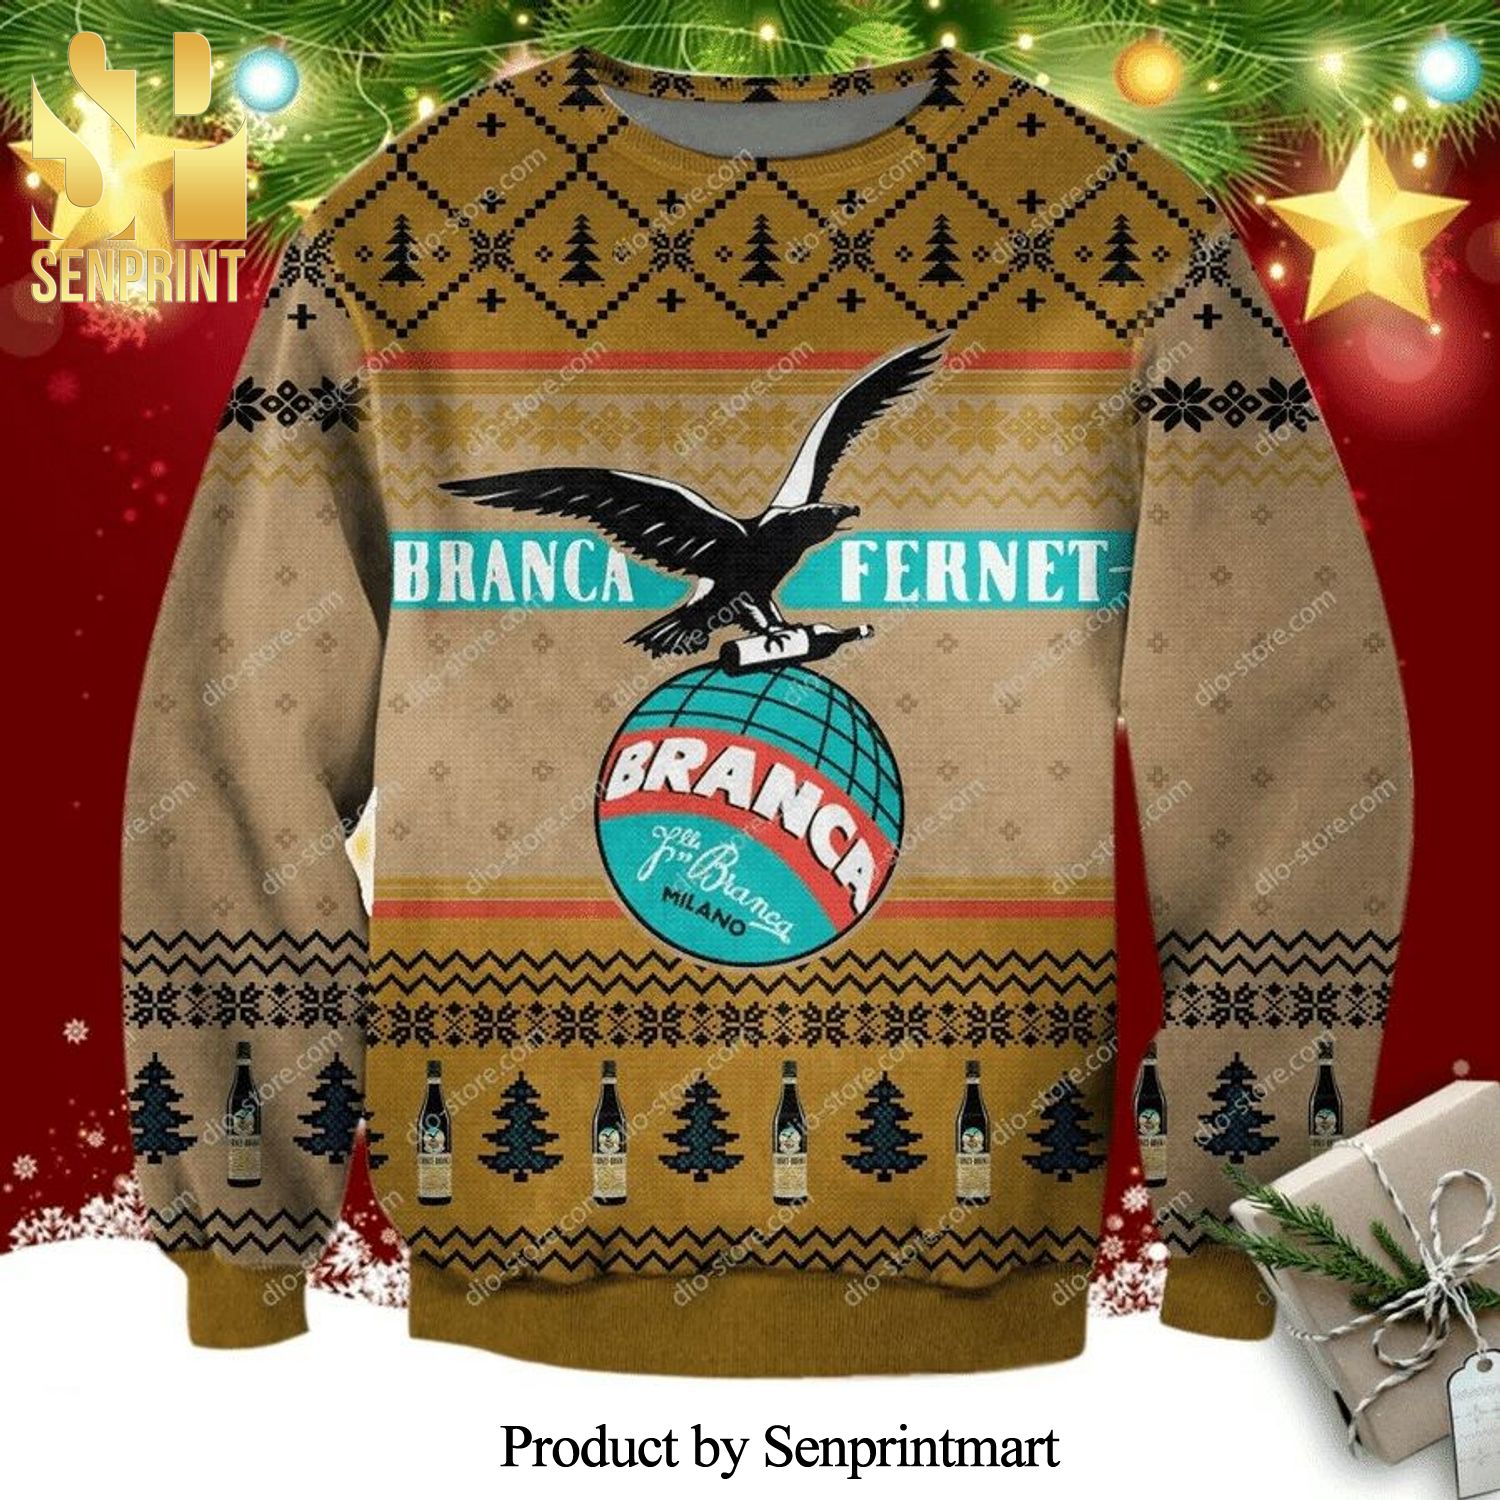 Fernet-Branca Beer Logo Knitted Ugly Christmas Sweater